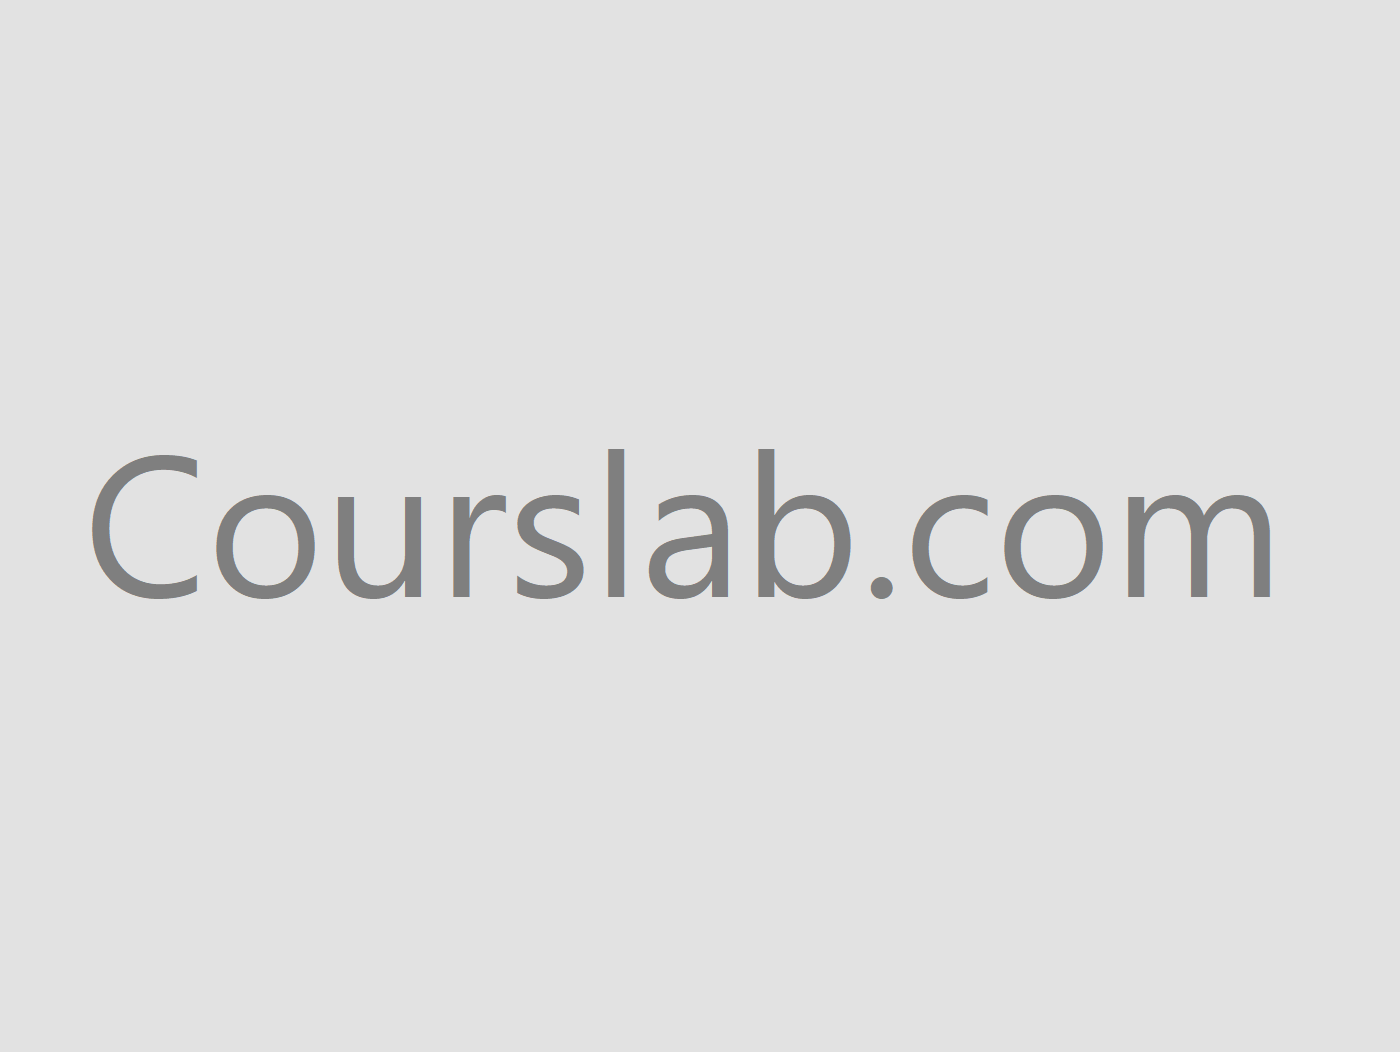 Free Online Tutorials and Courses - Courslab.com